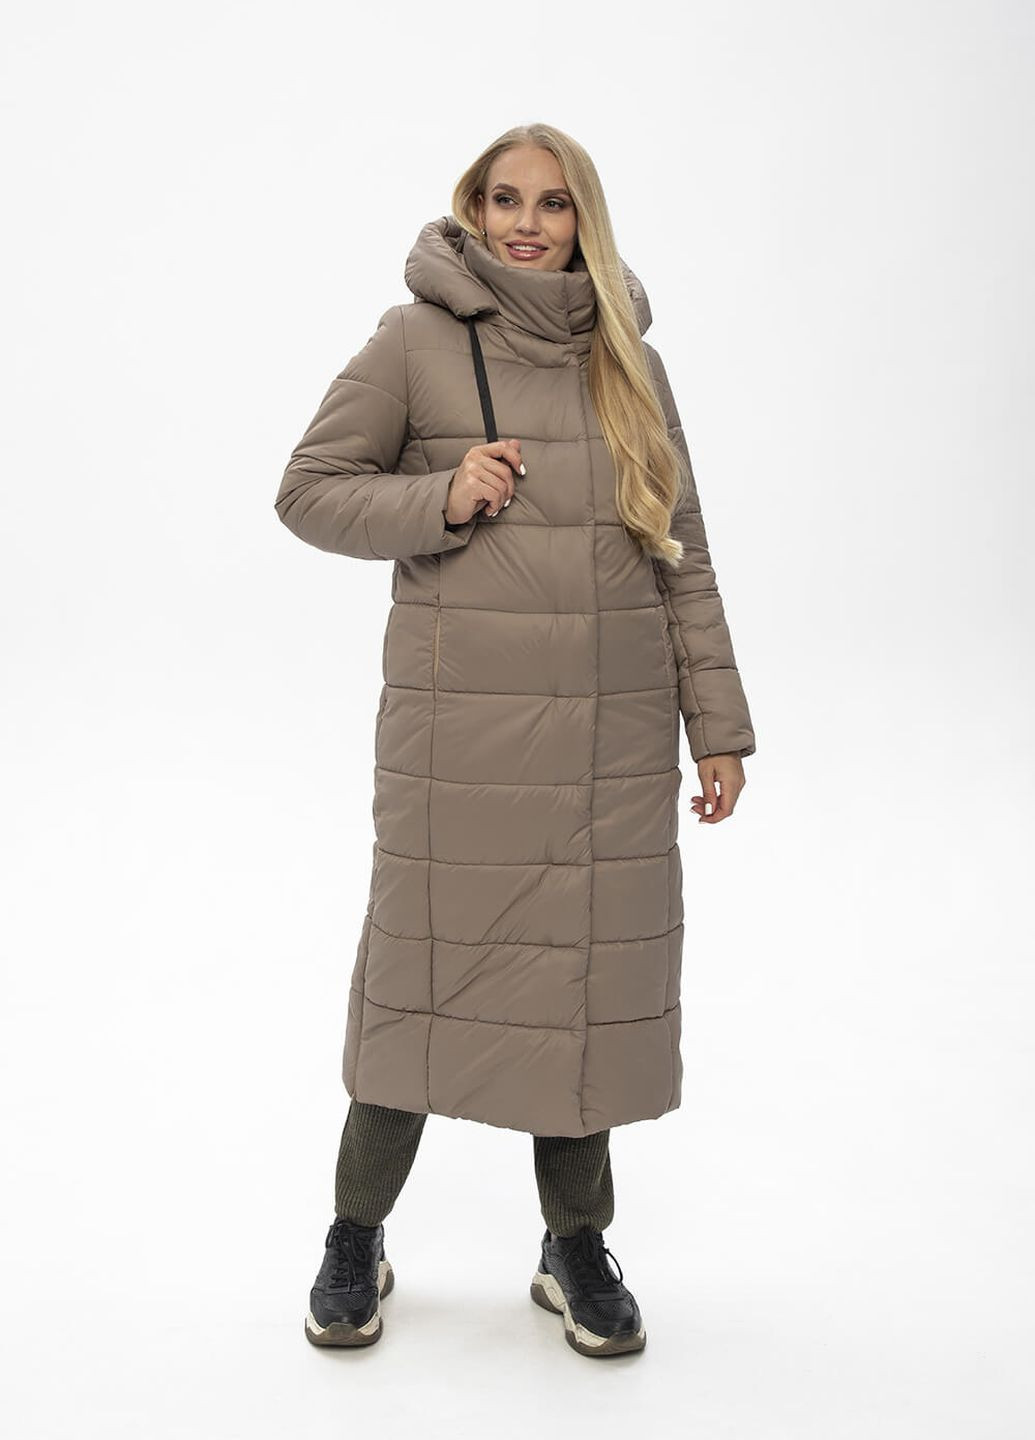 Бежева зимня куртка-пальто з капюшоном агата MioRichi